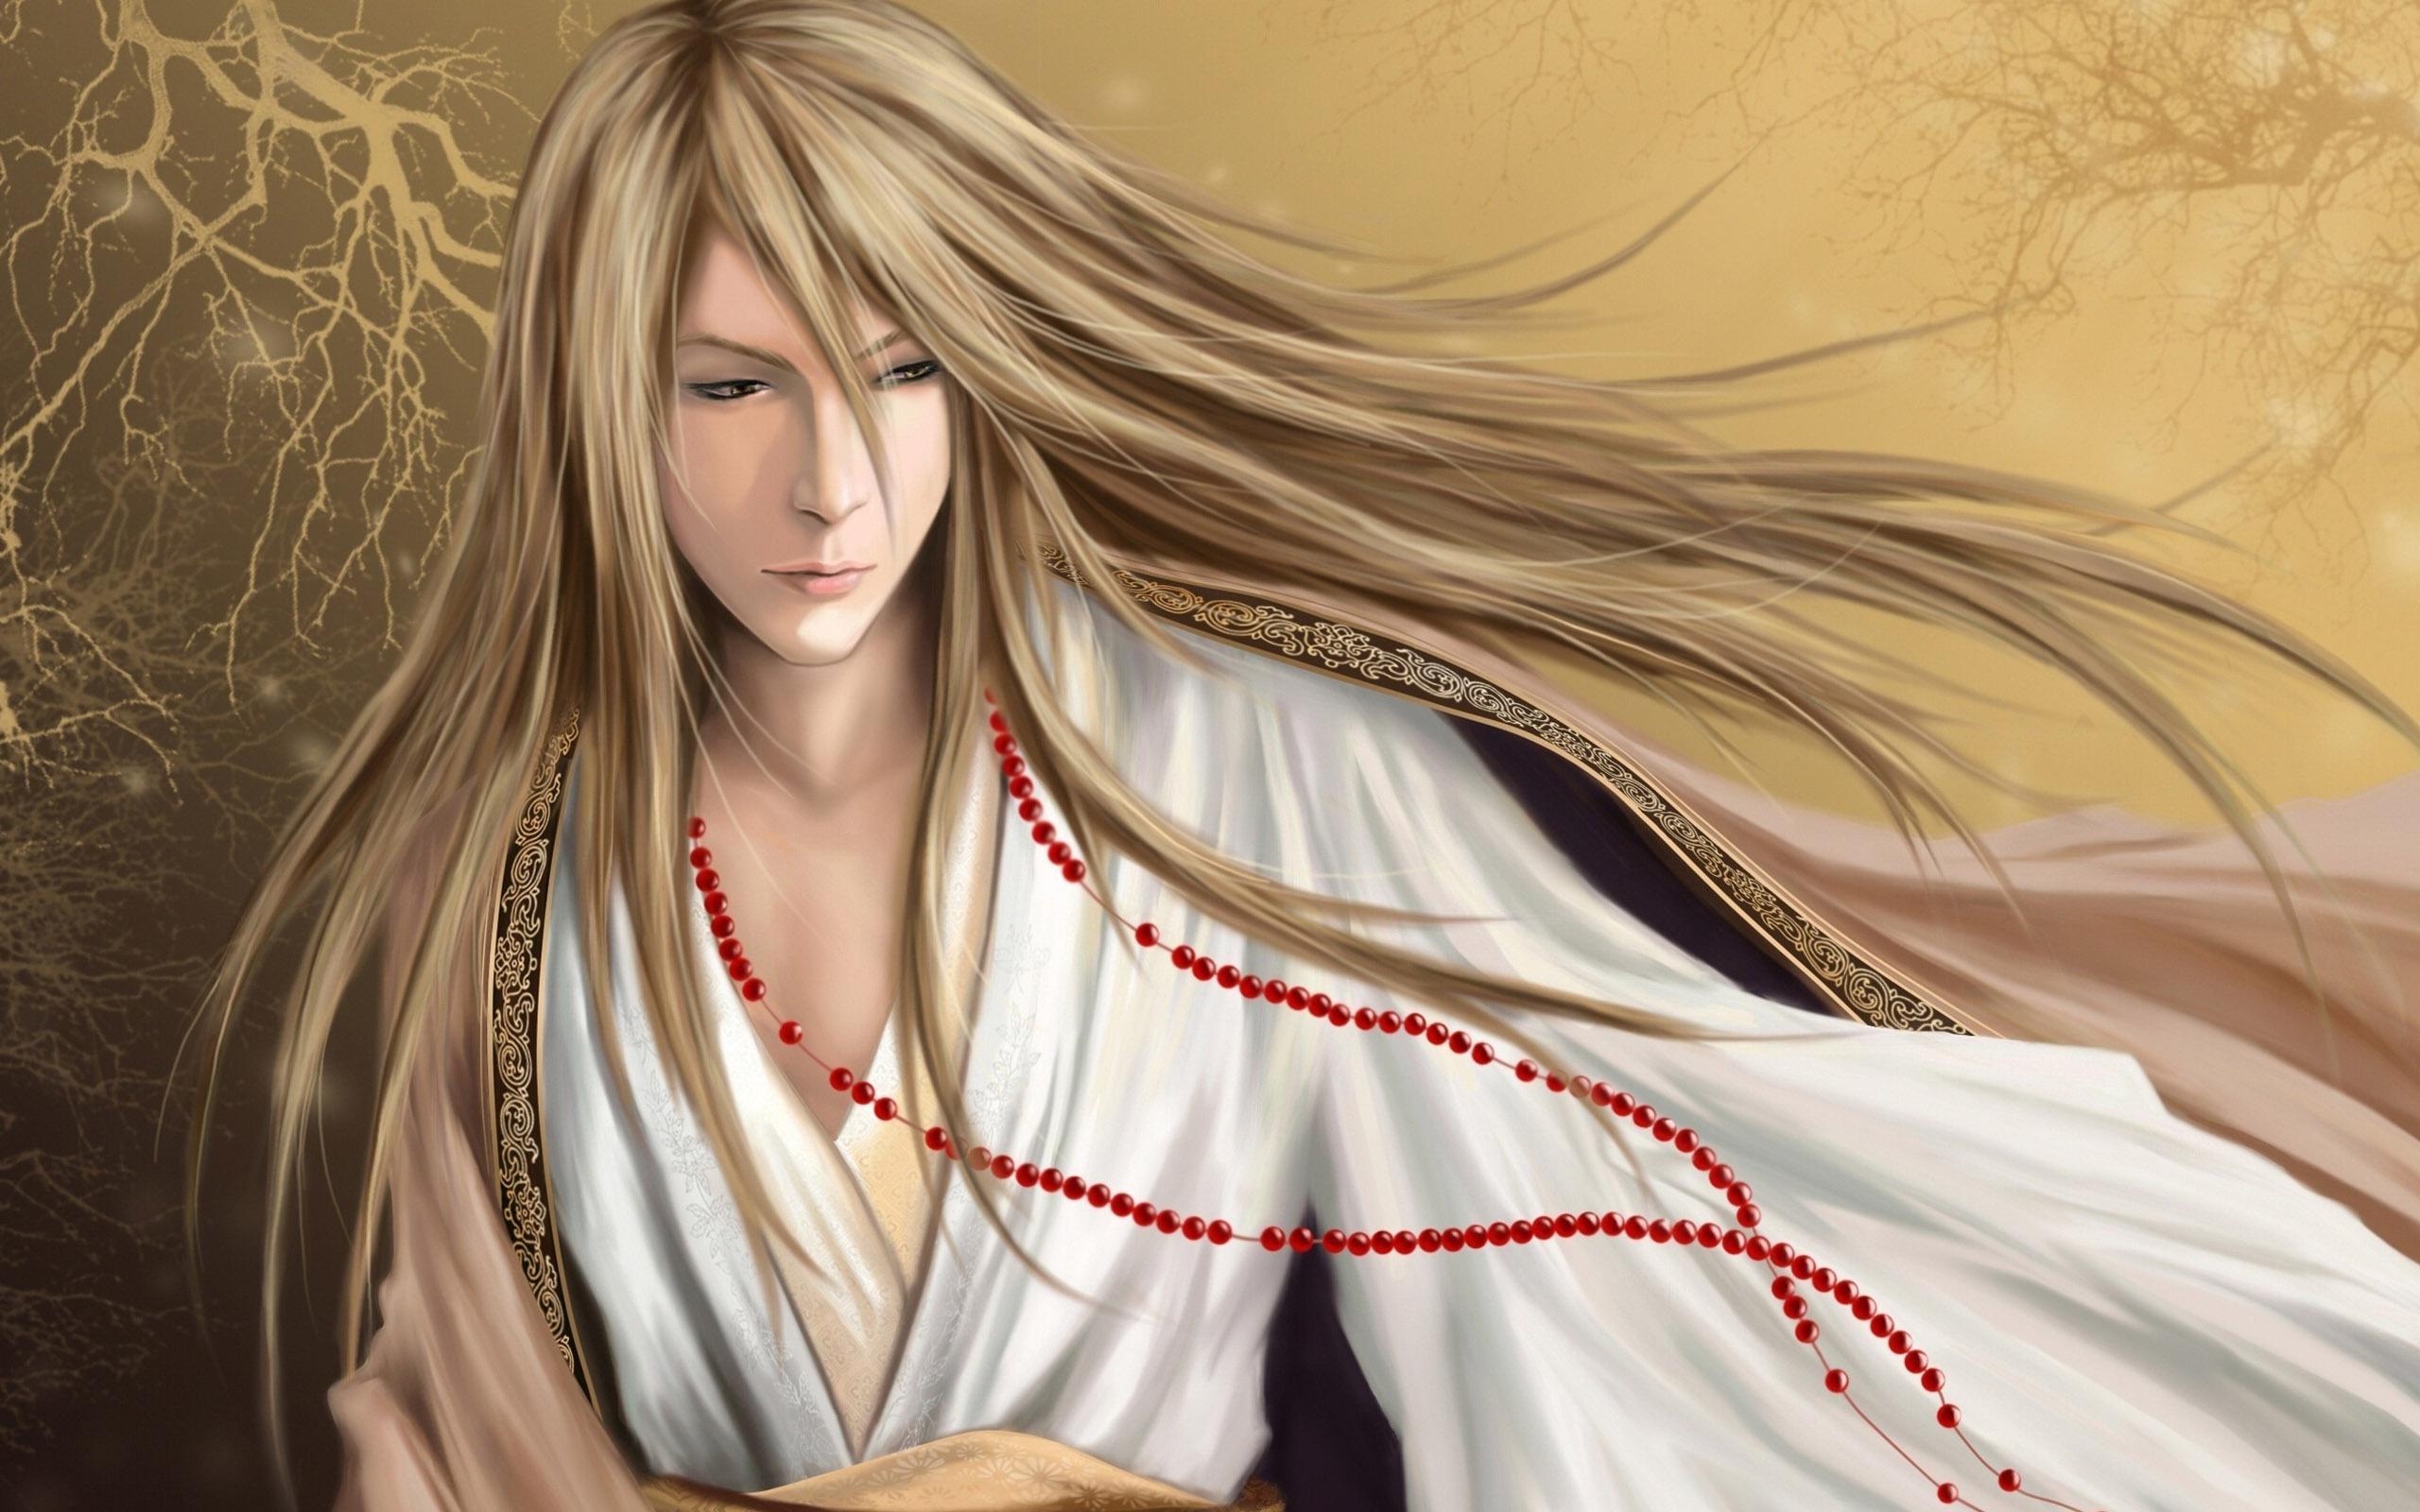 Man with long blonde hair wallpaper